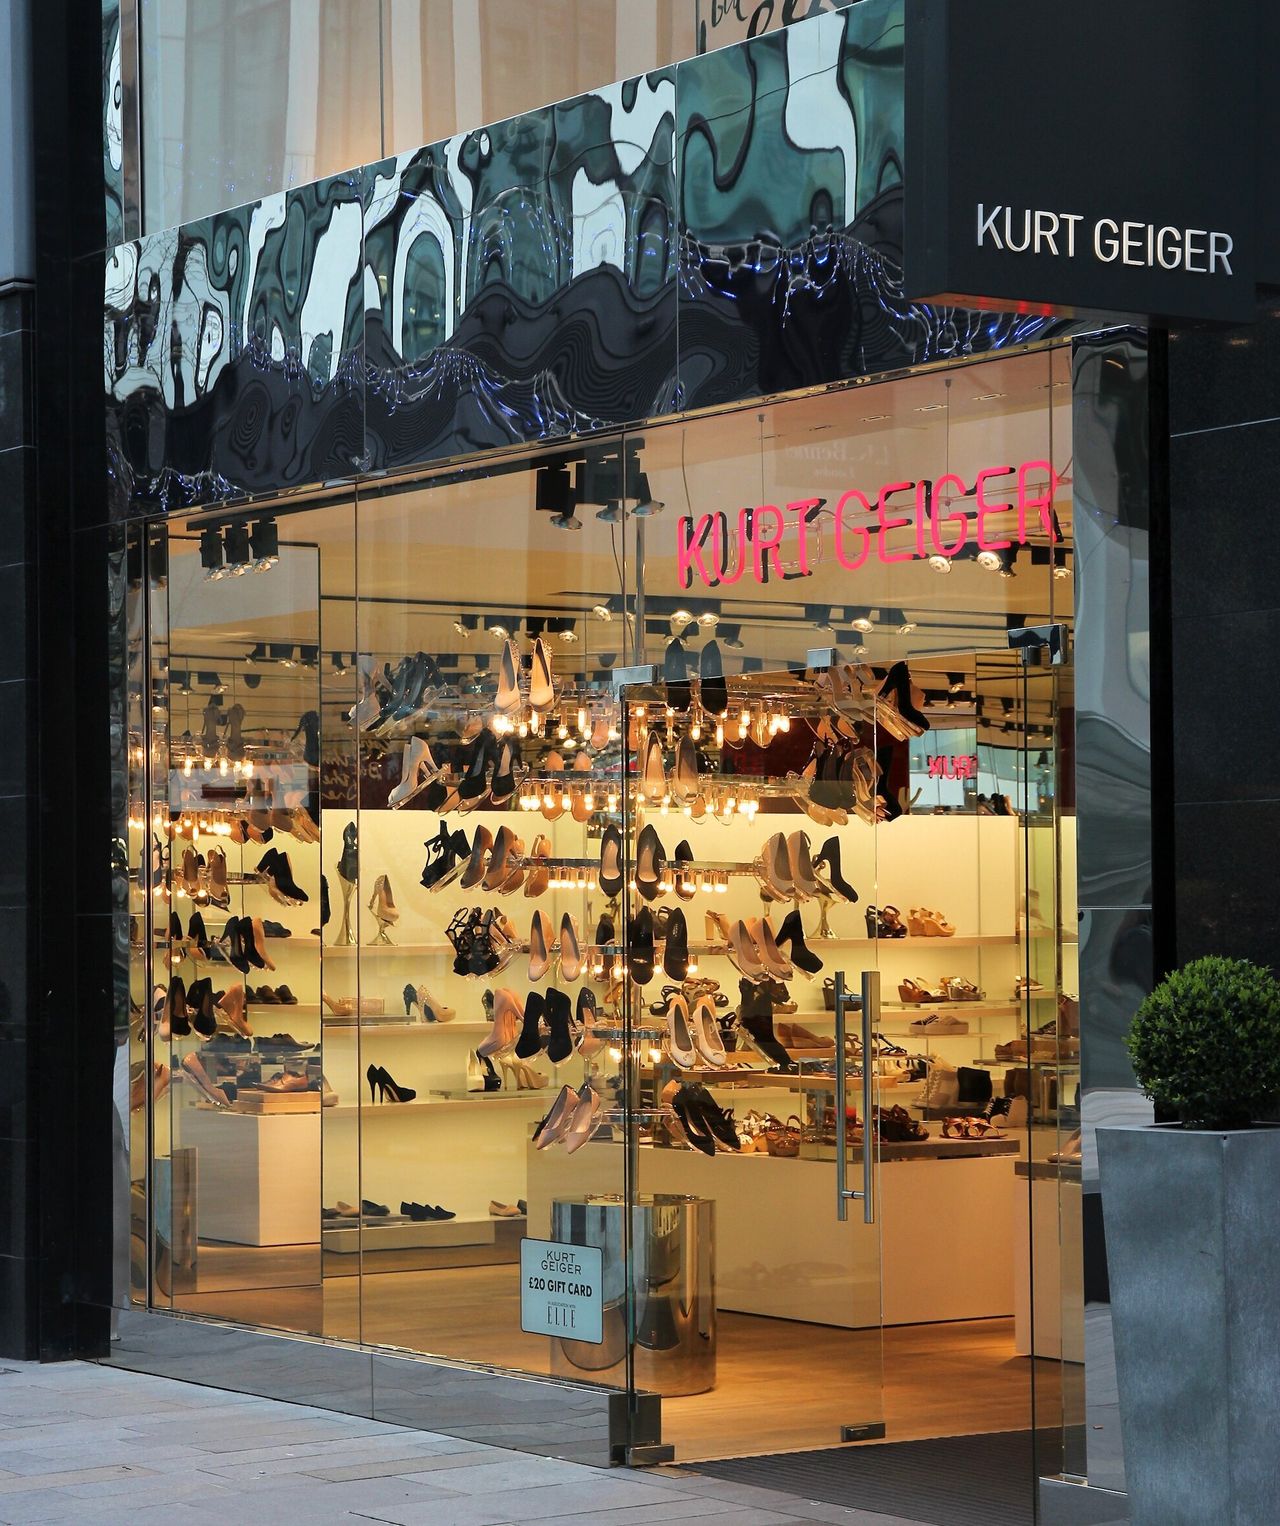 Kurt Geiger shoes store in Manchester